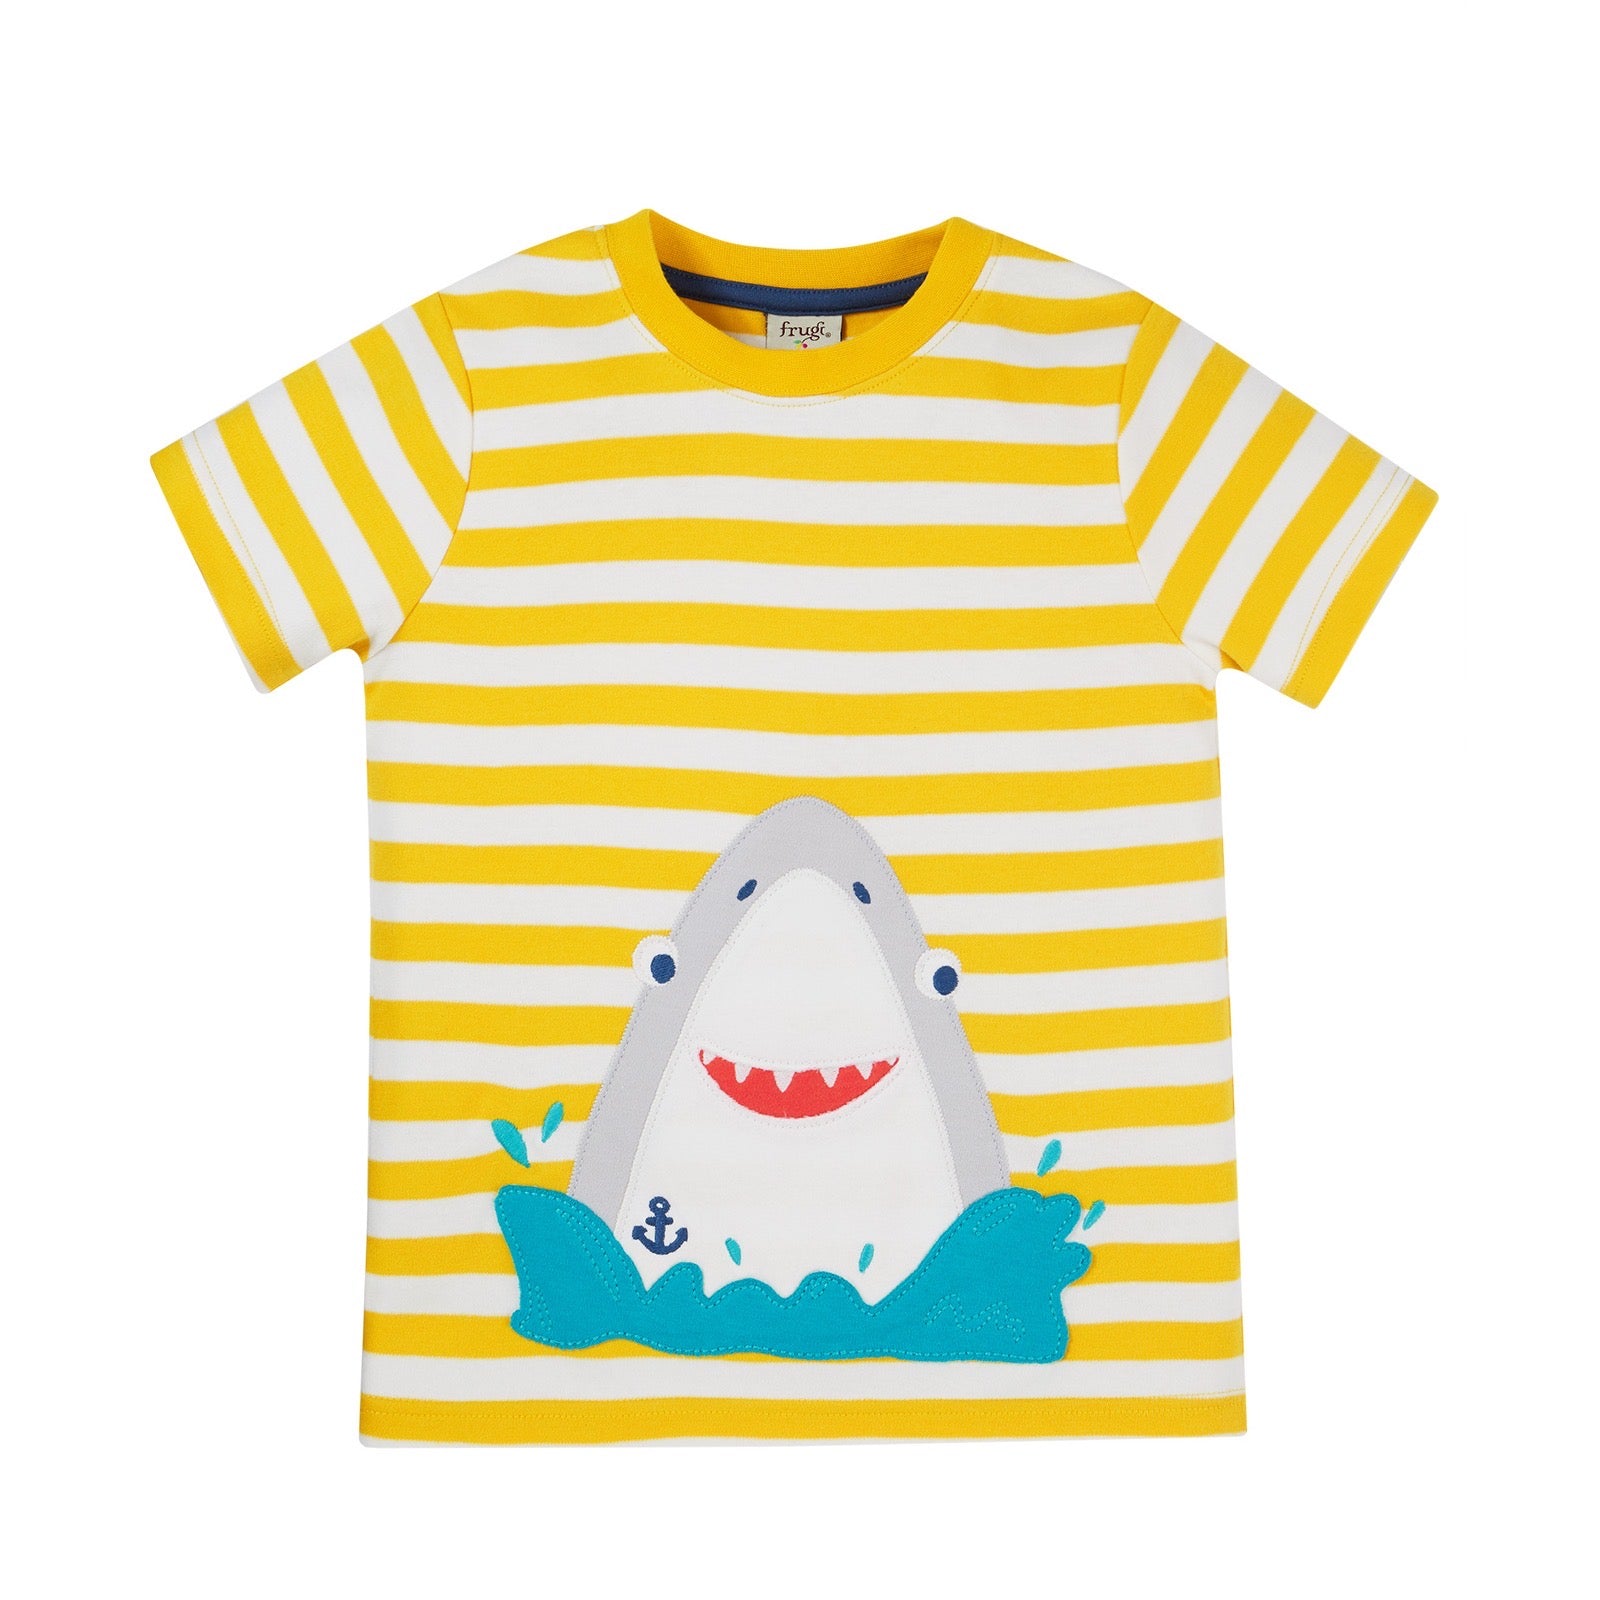 Frugi Sid Yellow Stripe Shark T-Shirt Mj5bi Clothing 2-3YRS / Yellow,3-4YRS / Yellow,4-5YRS / Yellow,5-6YRS / Yellow,6-7YRS / Yellow,7-8YRS / Yellow